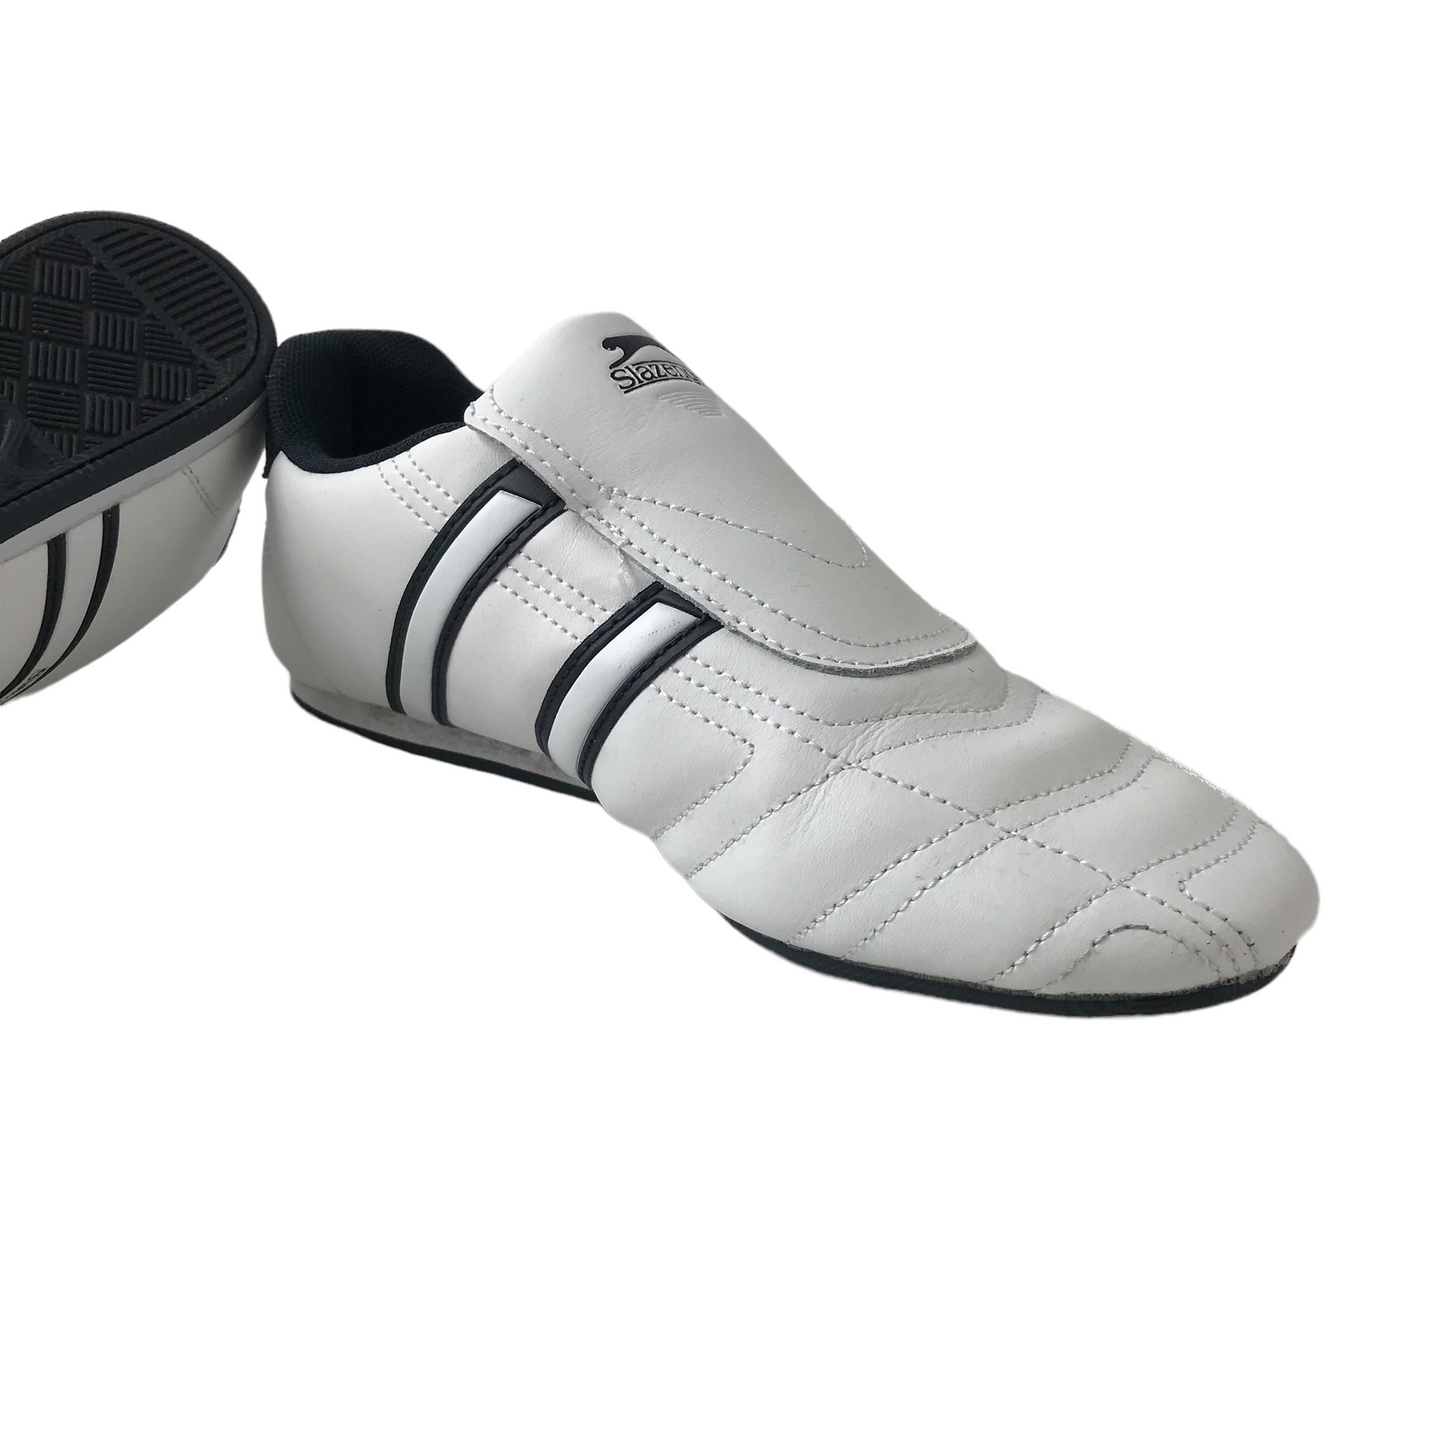 Slazenger Warrior White Slip-on Trainers Shoes Size UK 5